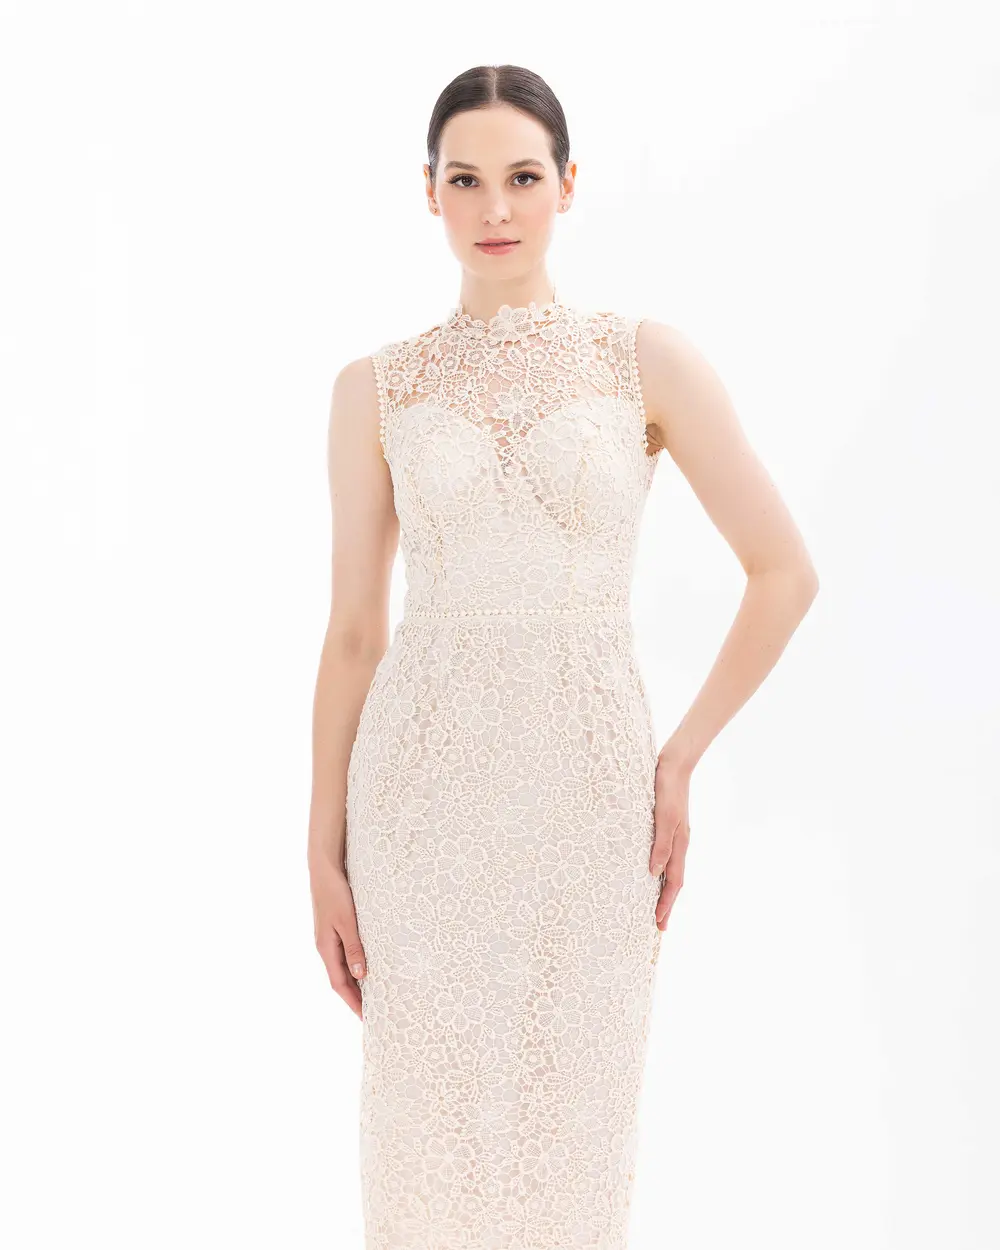 Narrow Form Lace Midi Length Evening Dress